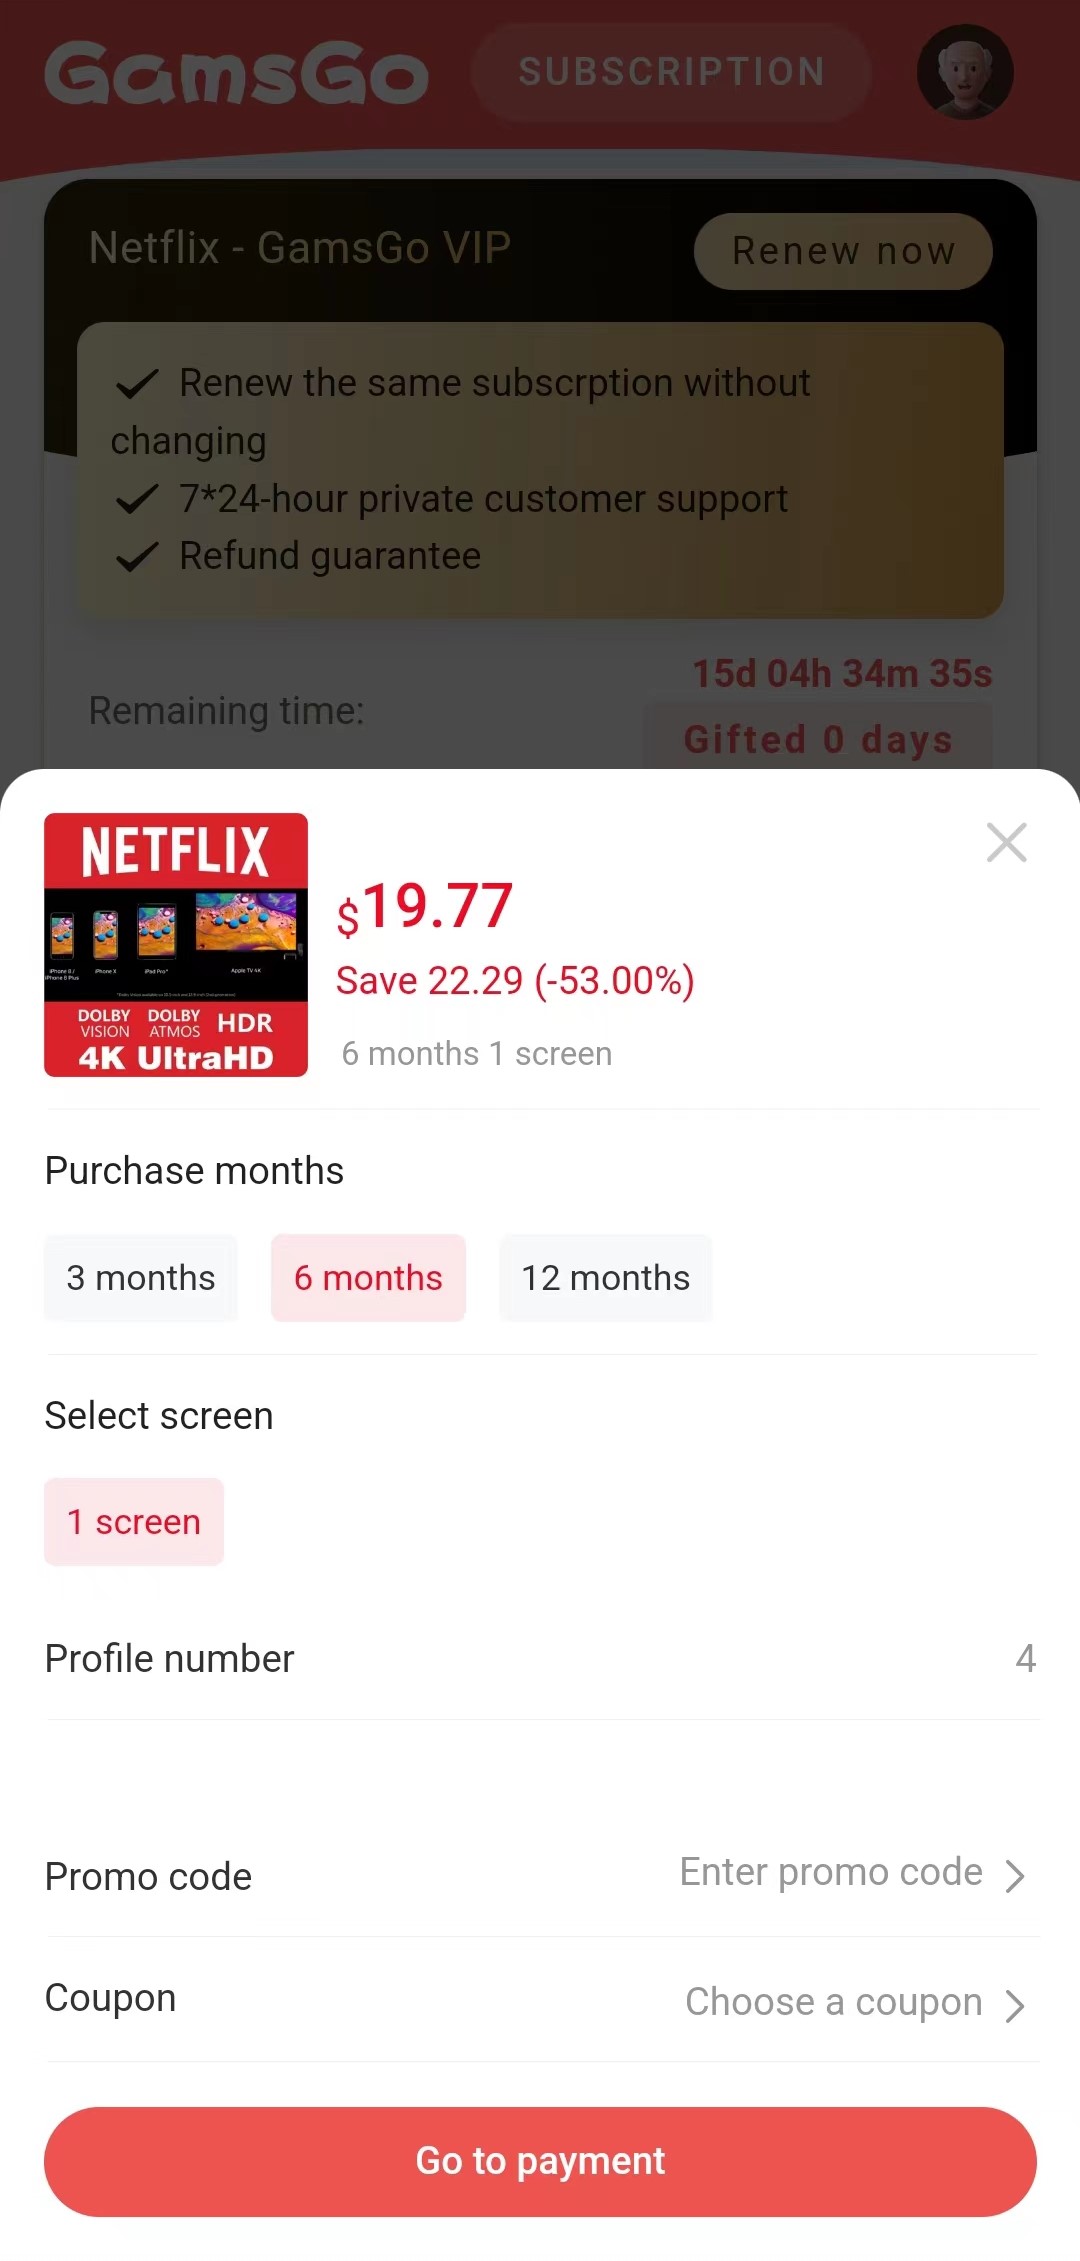 How to renew Netflix subscription on GamsGo